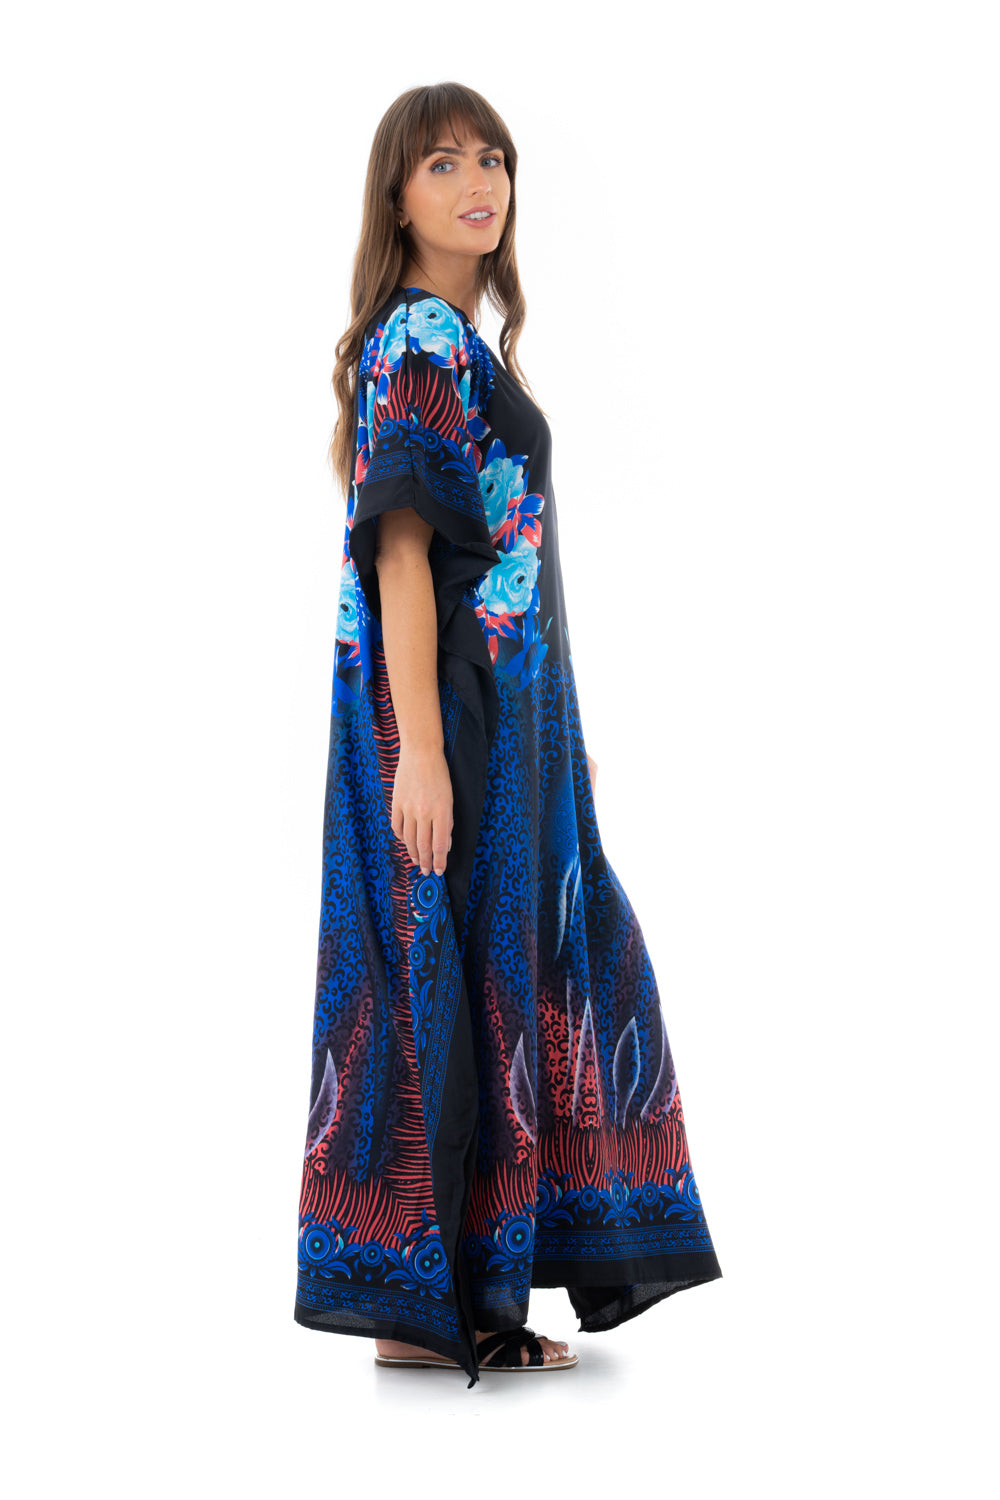 Ladies Floral Full Length Maxi Kaftan Dress in Blue